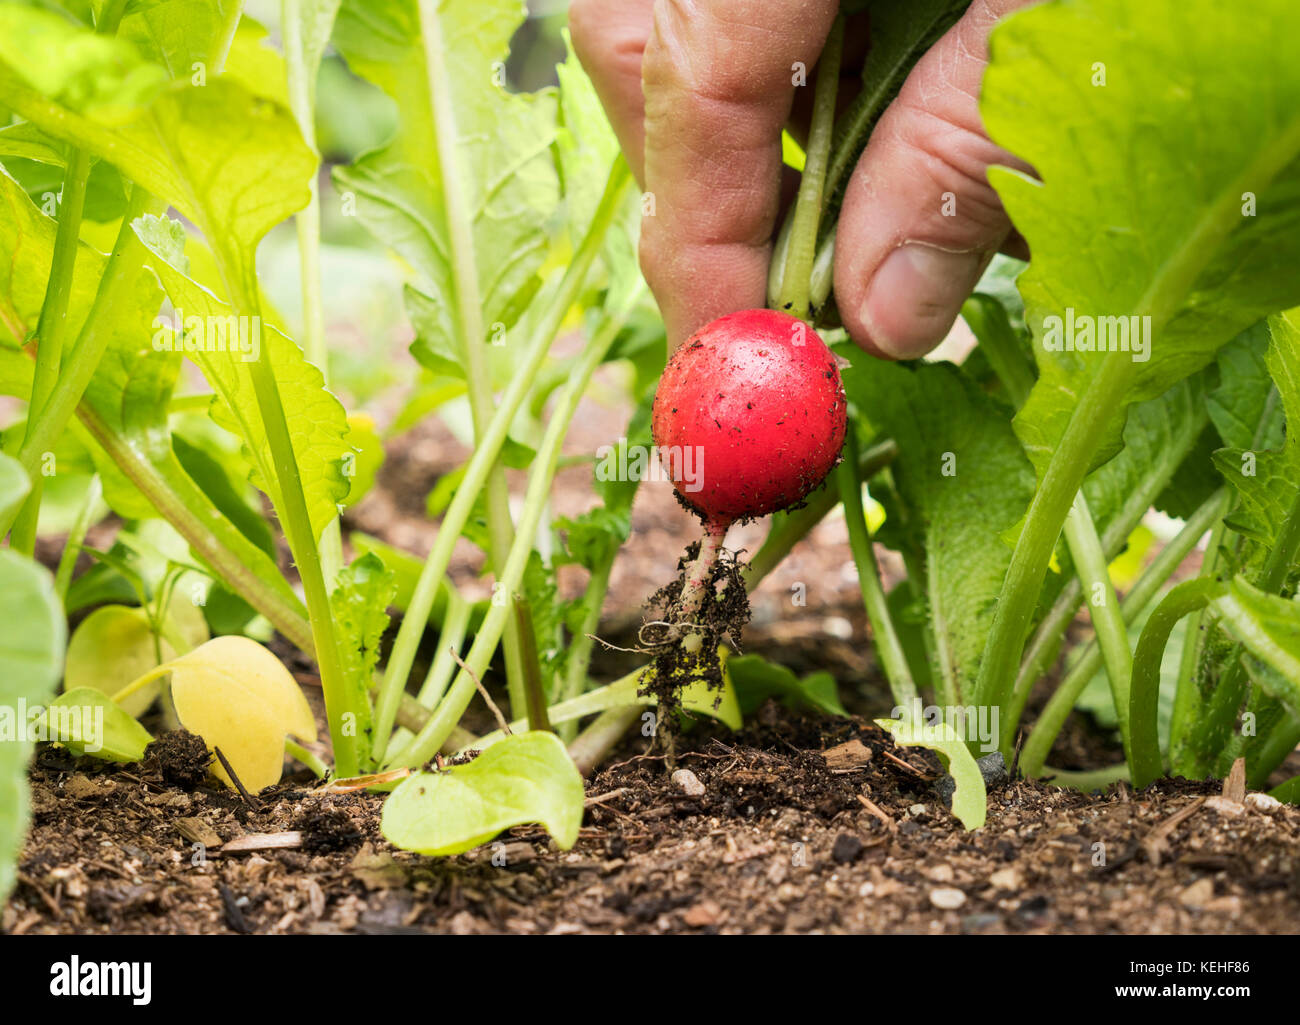 Hand of Caucasian man picking radish in garden Stock Photo